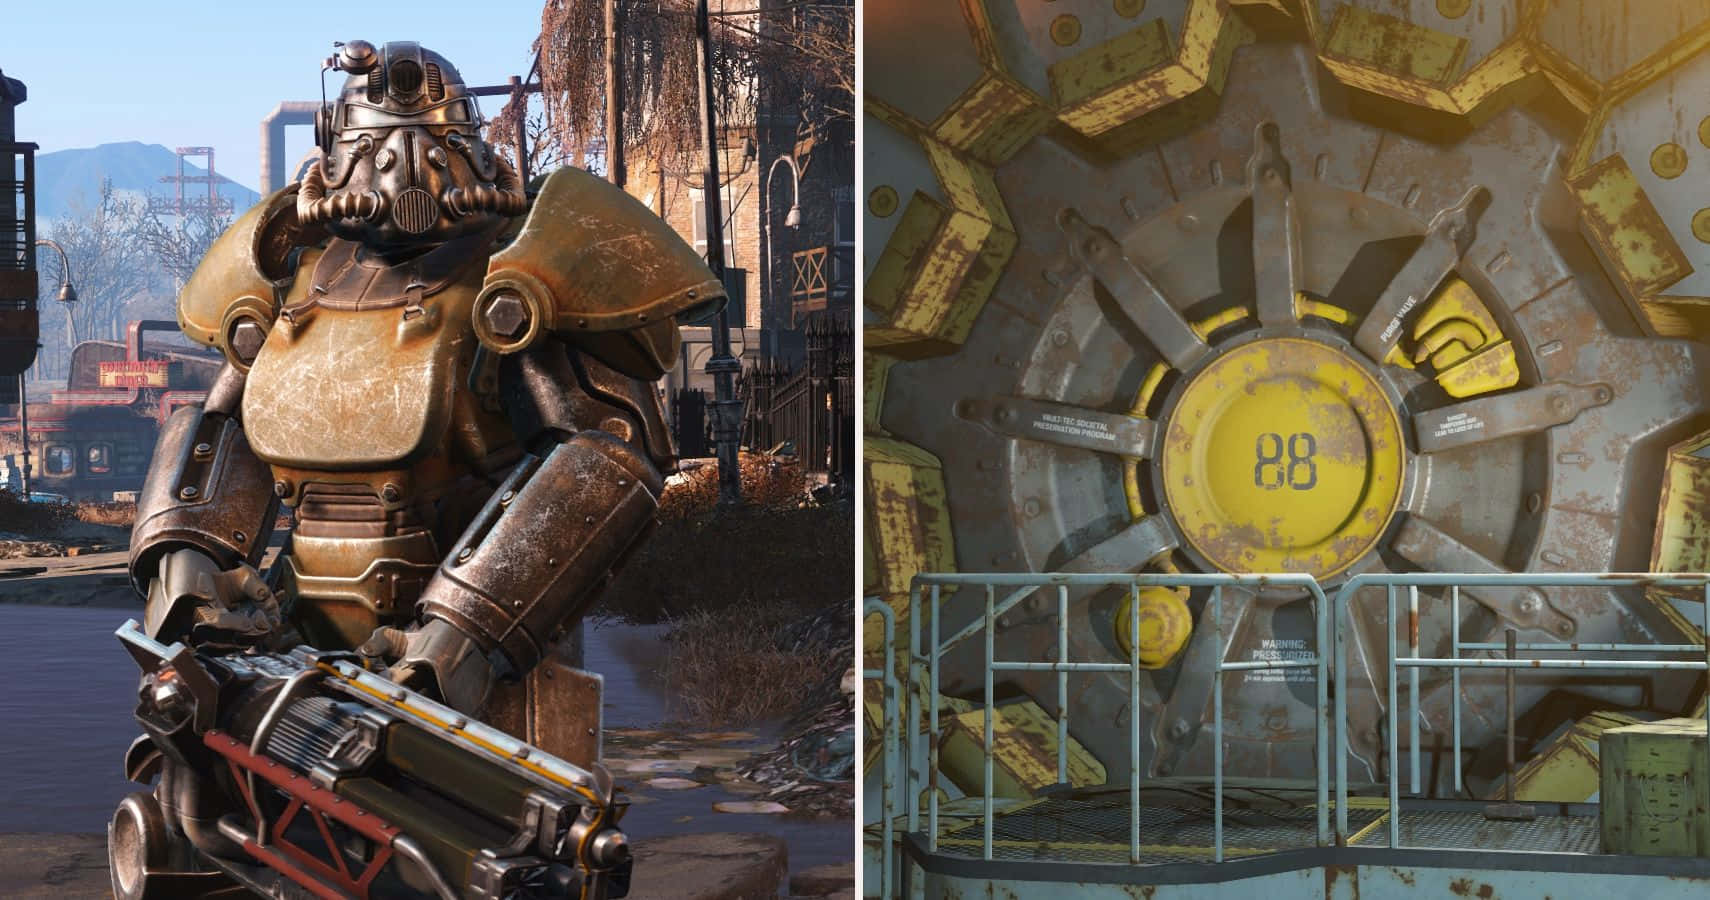 Increíblefondo De Pantalla De Fallout 4 Vault Que Muestra La Icónica Puerta De La Bóveda. Fondo de pantalla